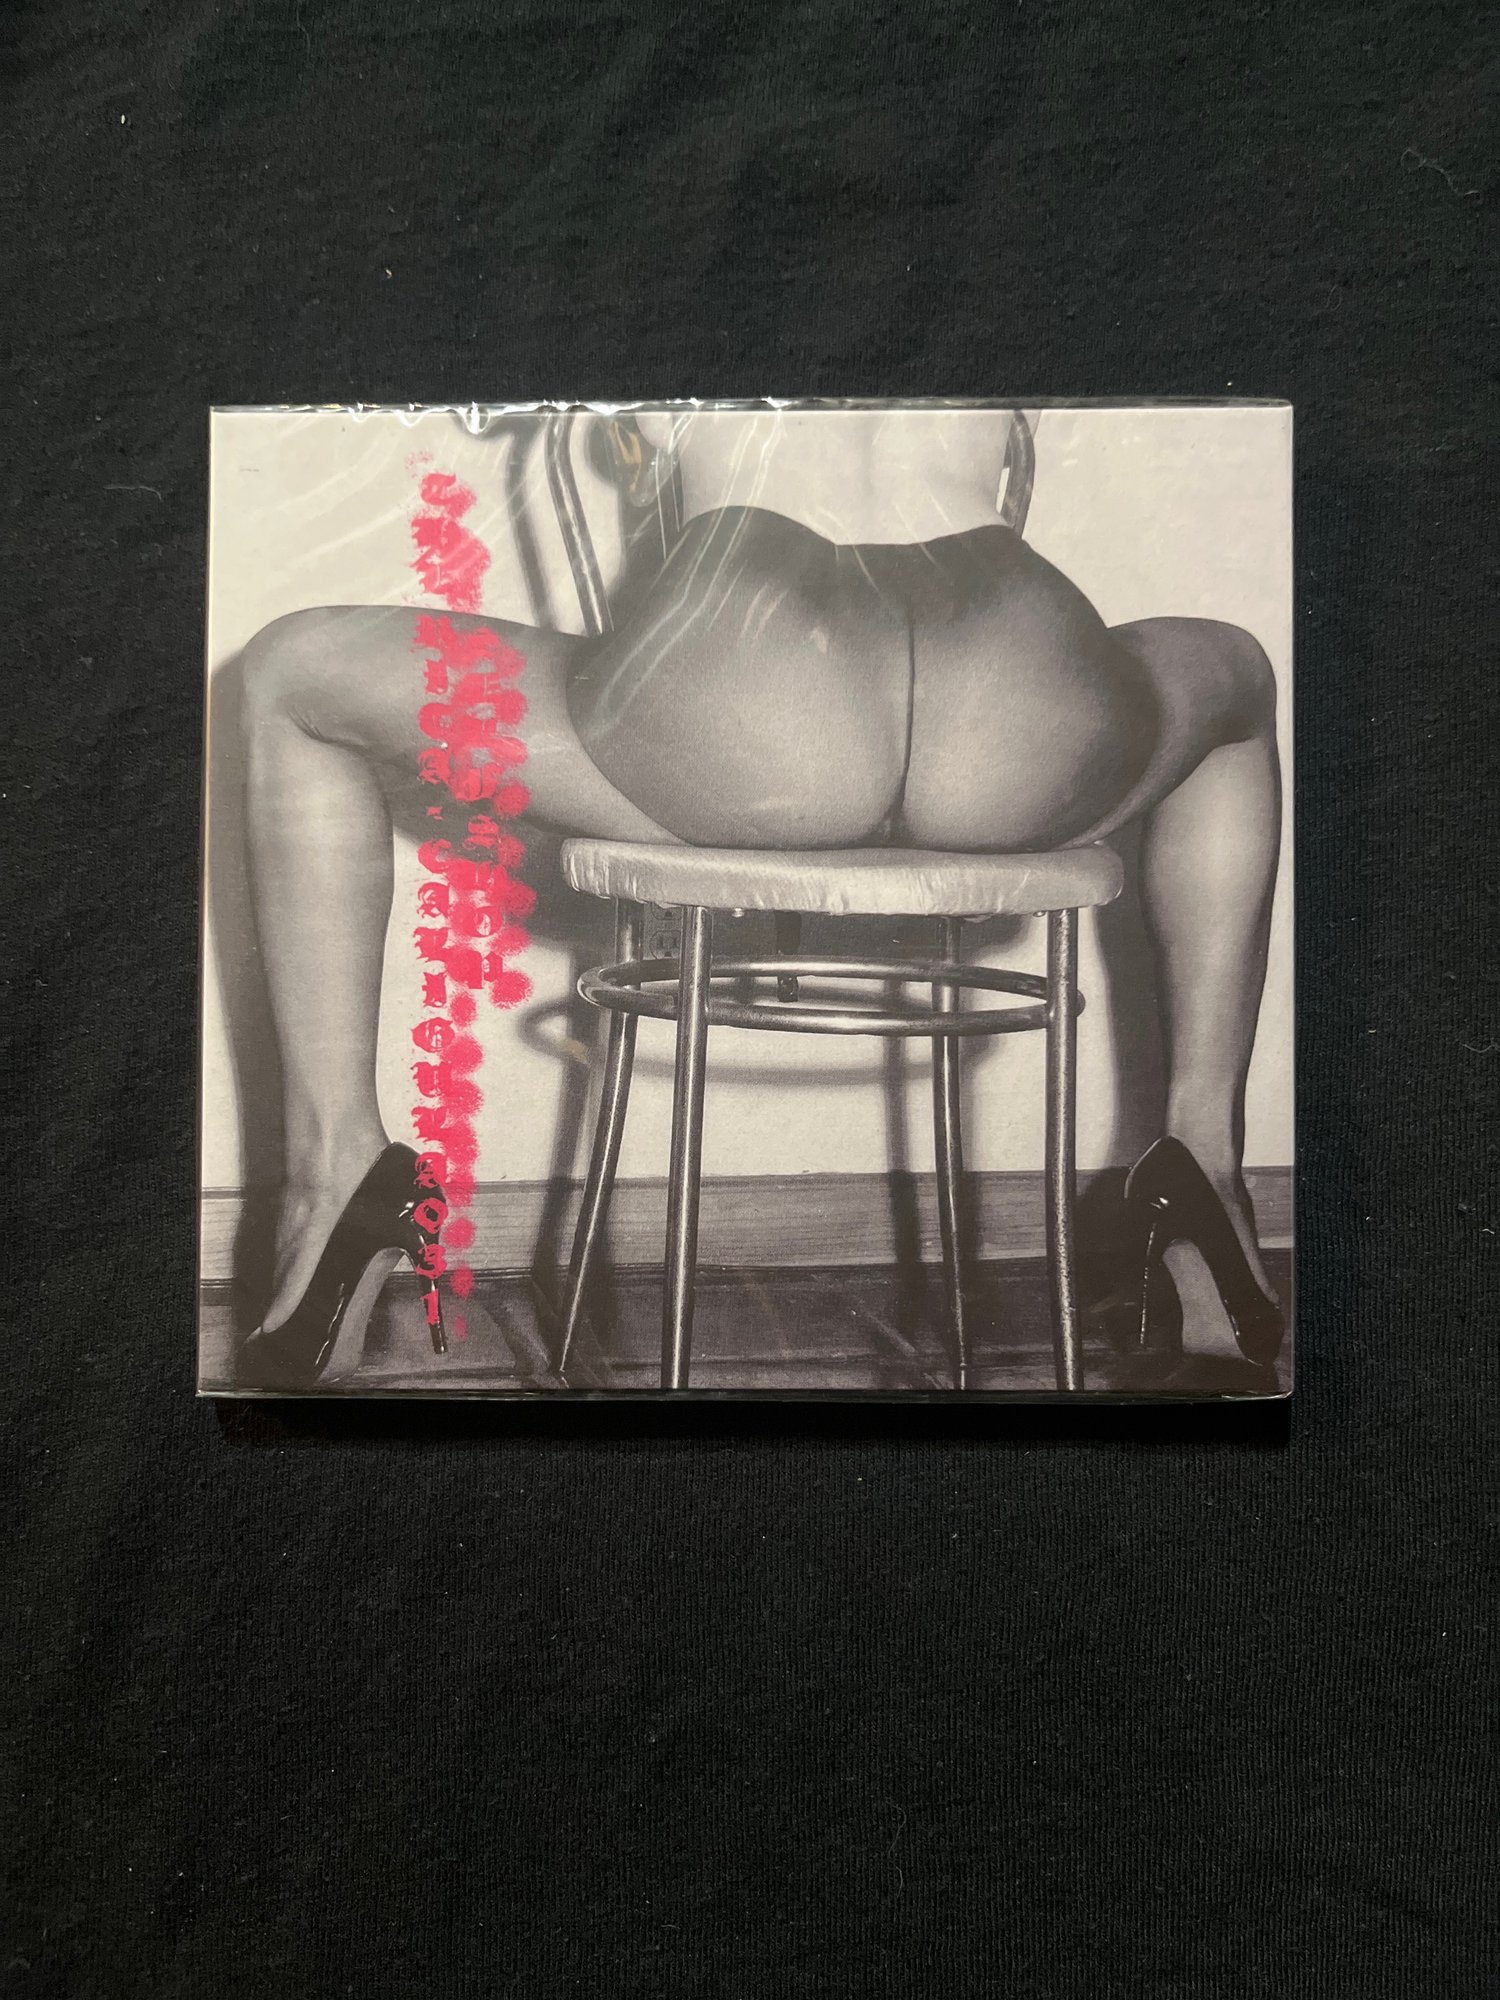 The Rita/Caligula031 - Self Shop CD (OEC)